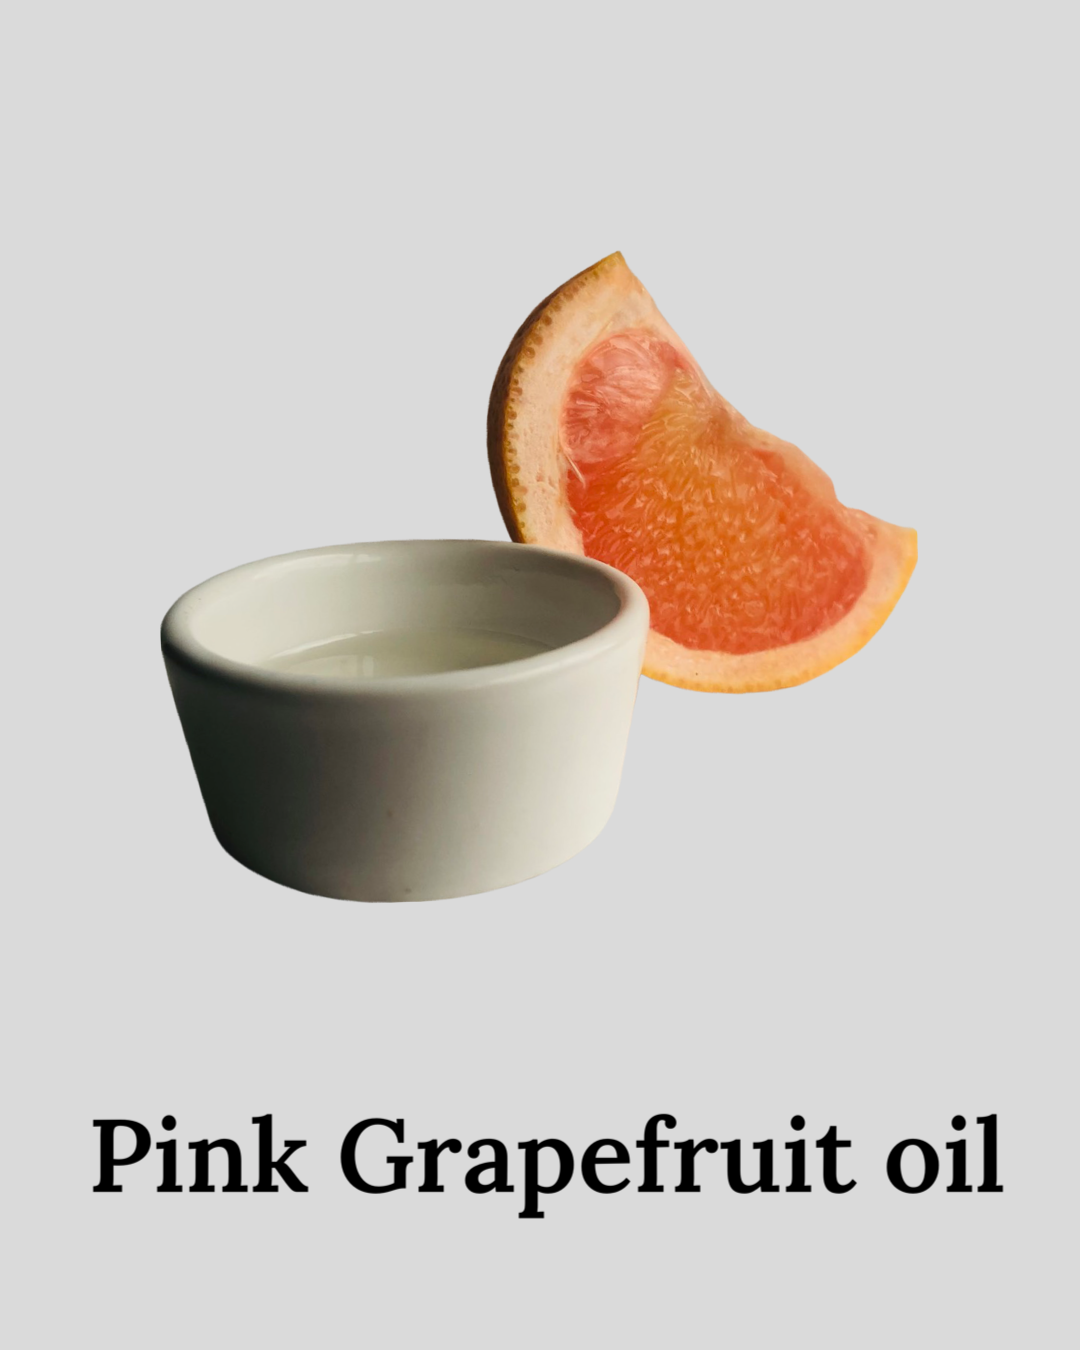 Pink Grapefruit oil